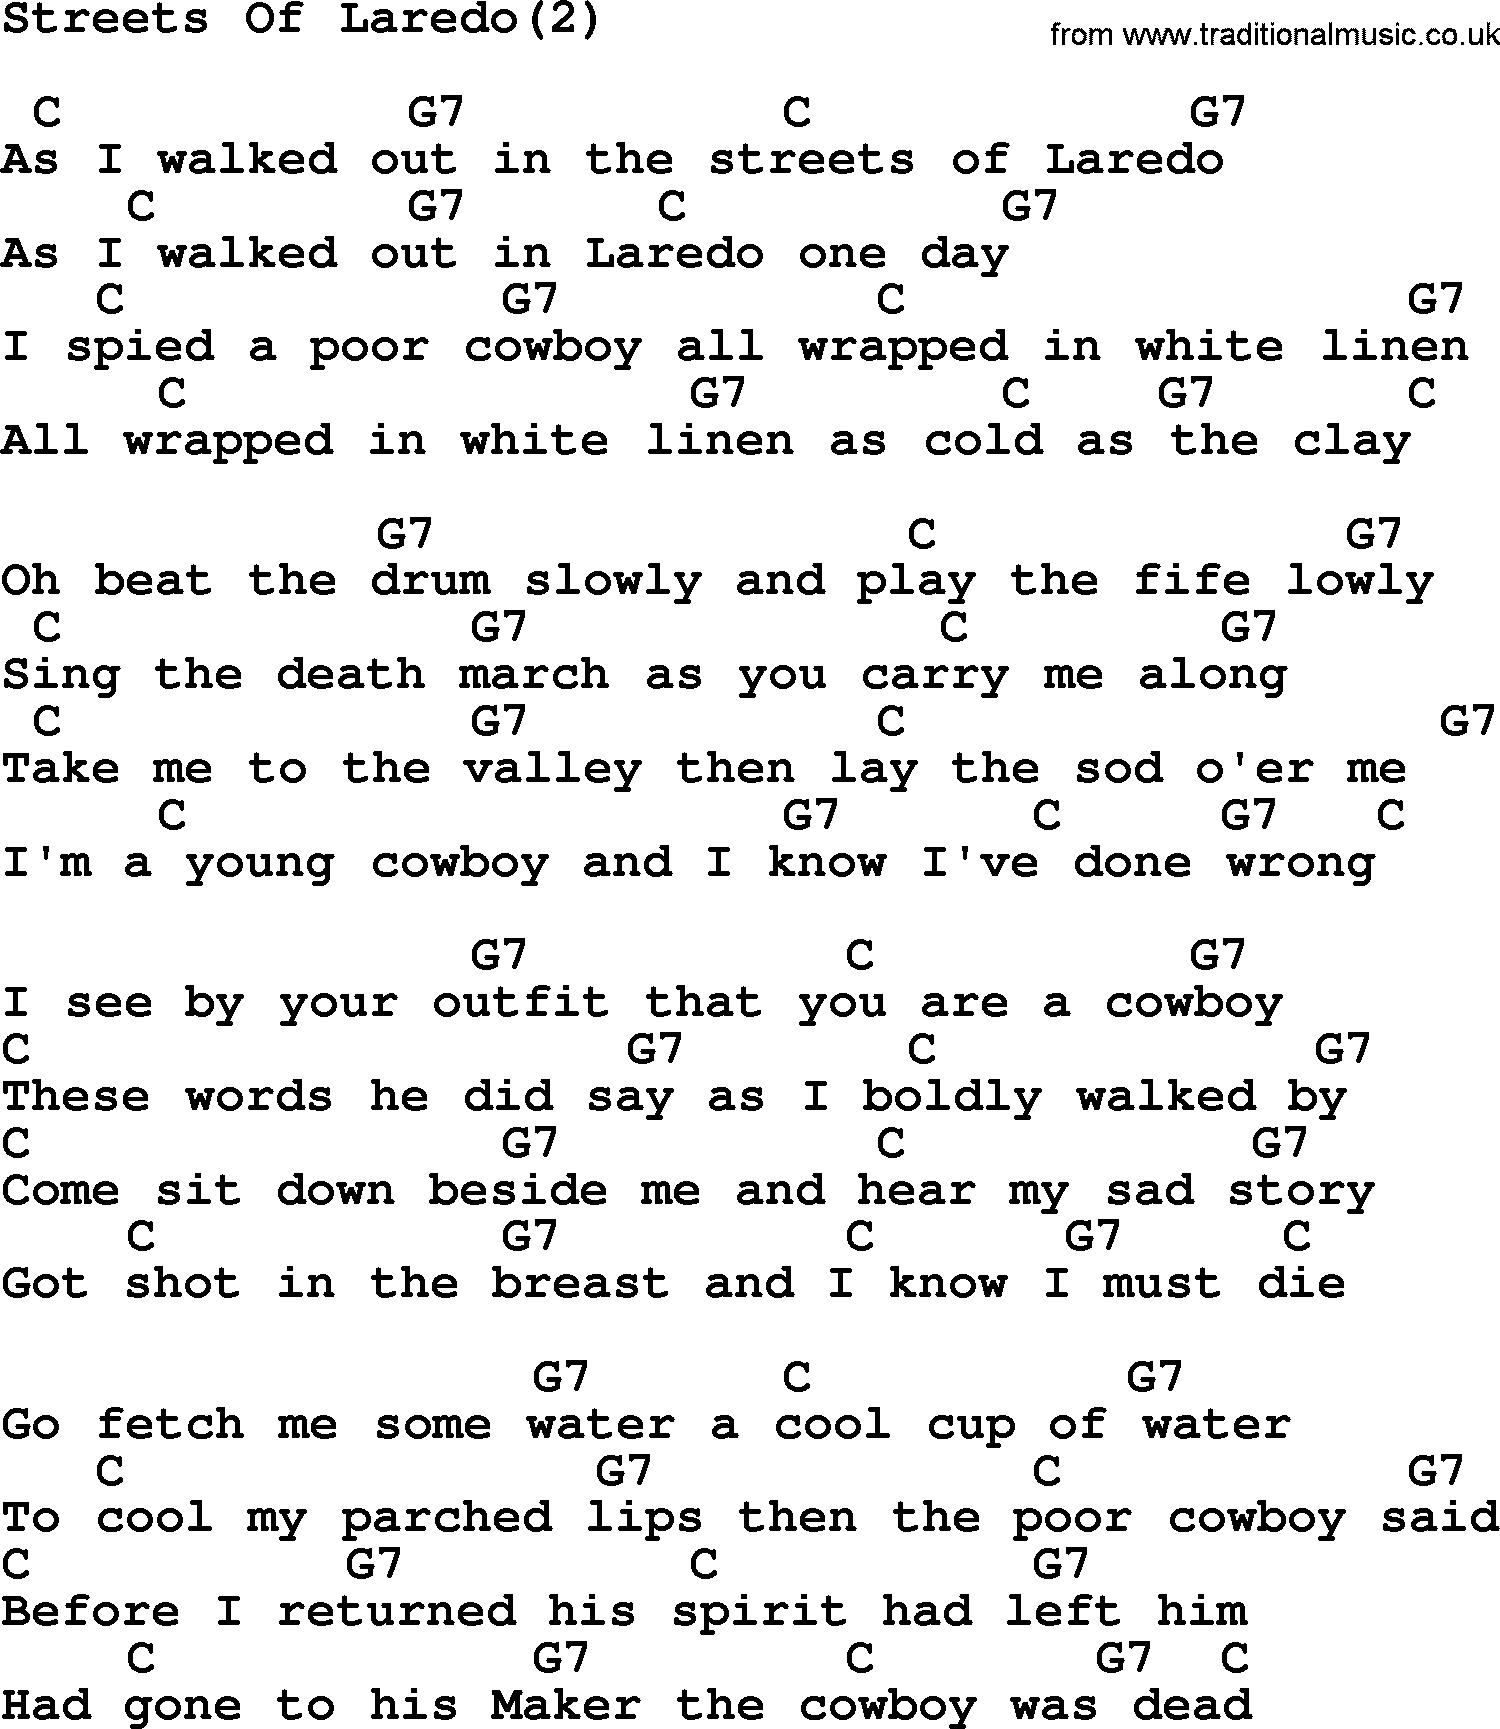 Johnny Cash song Streets Of Laredo(2), lyrics and chords